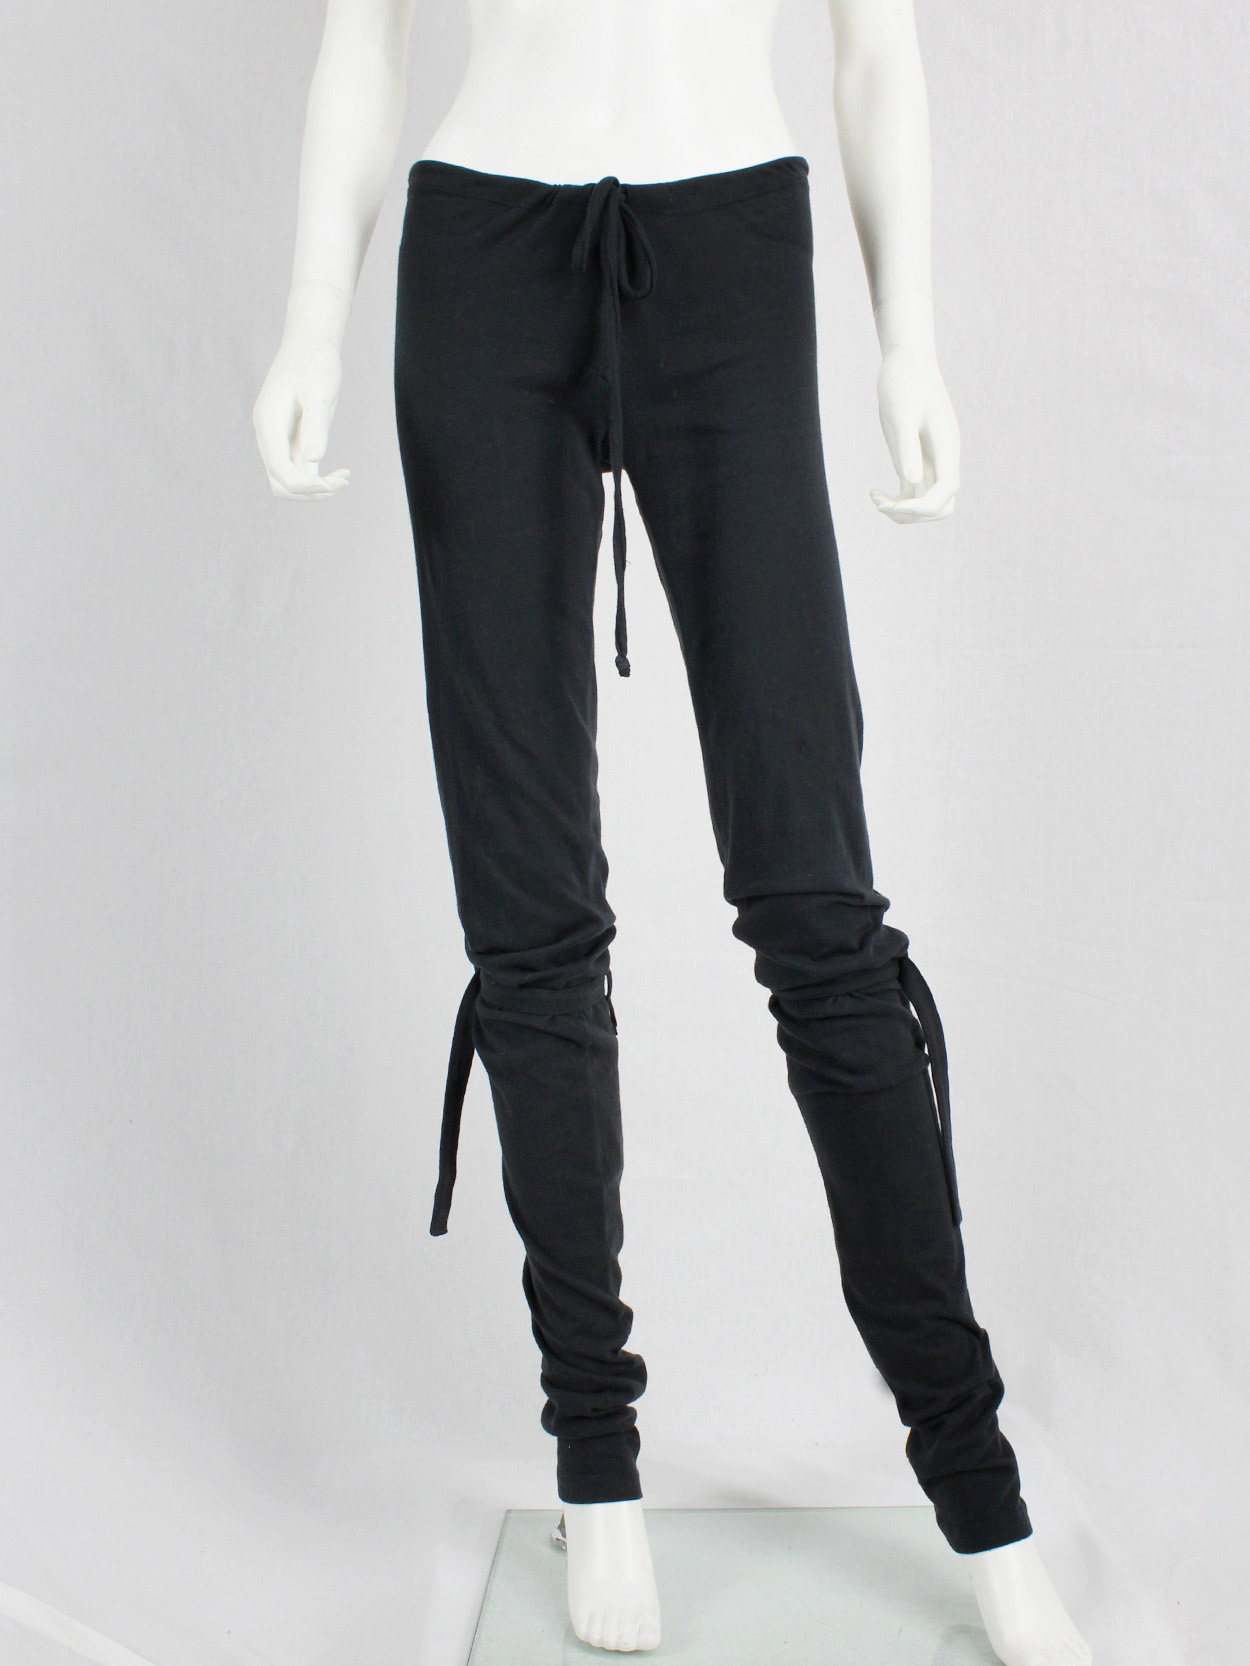 Ann Demeulemeester black leggings with belt straps - V A N II T A S